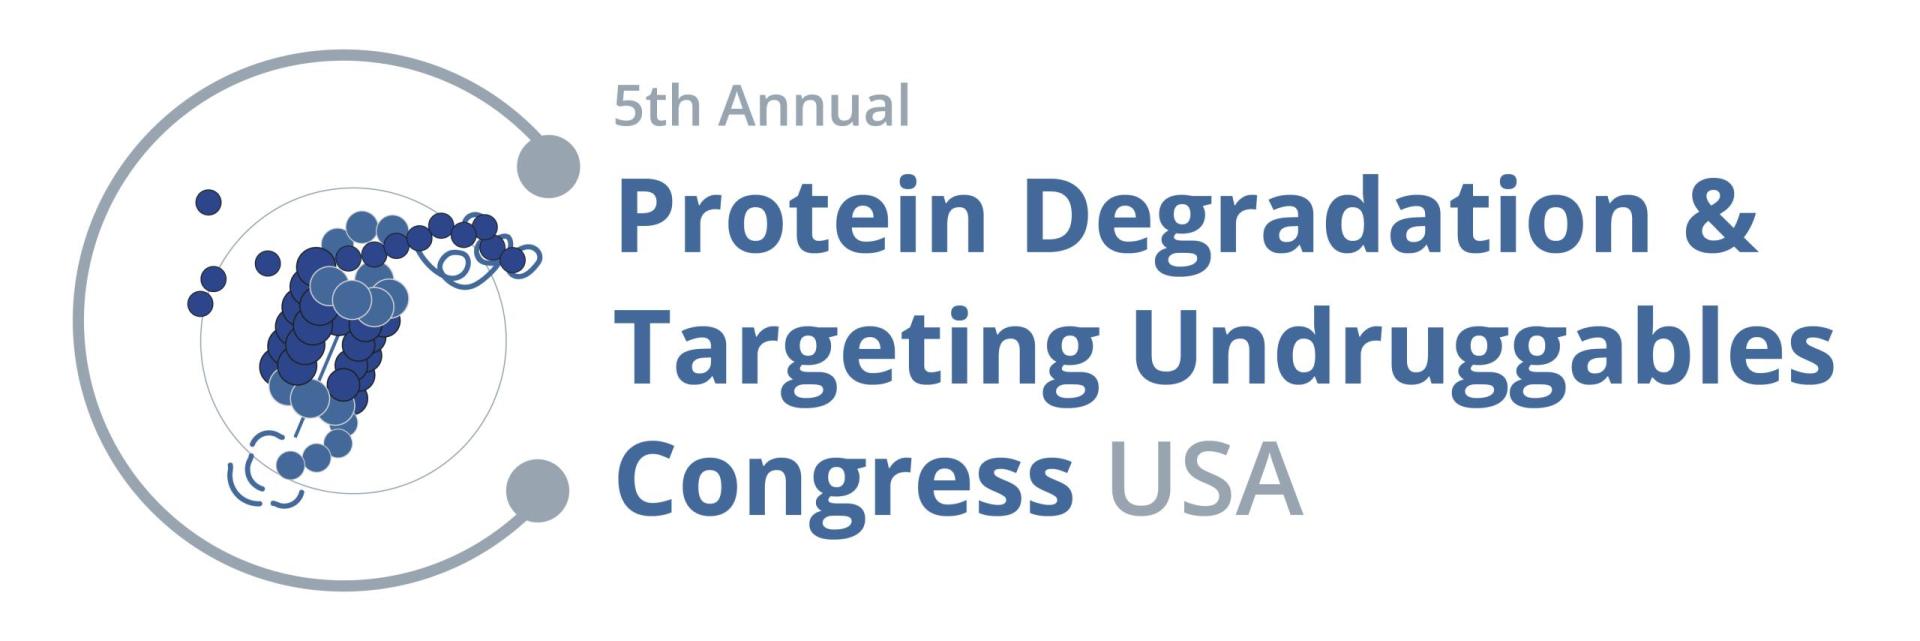 Protein Degradation & Targeting Undruggables Congress USA